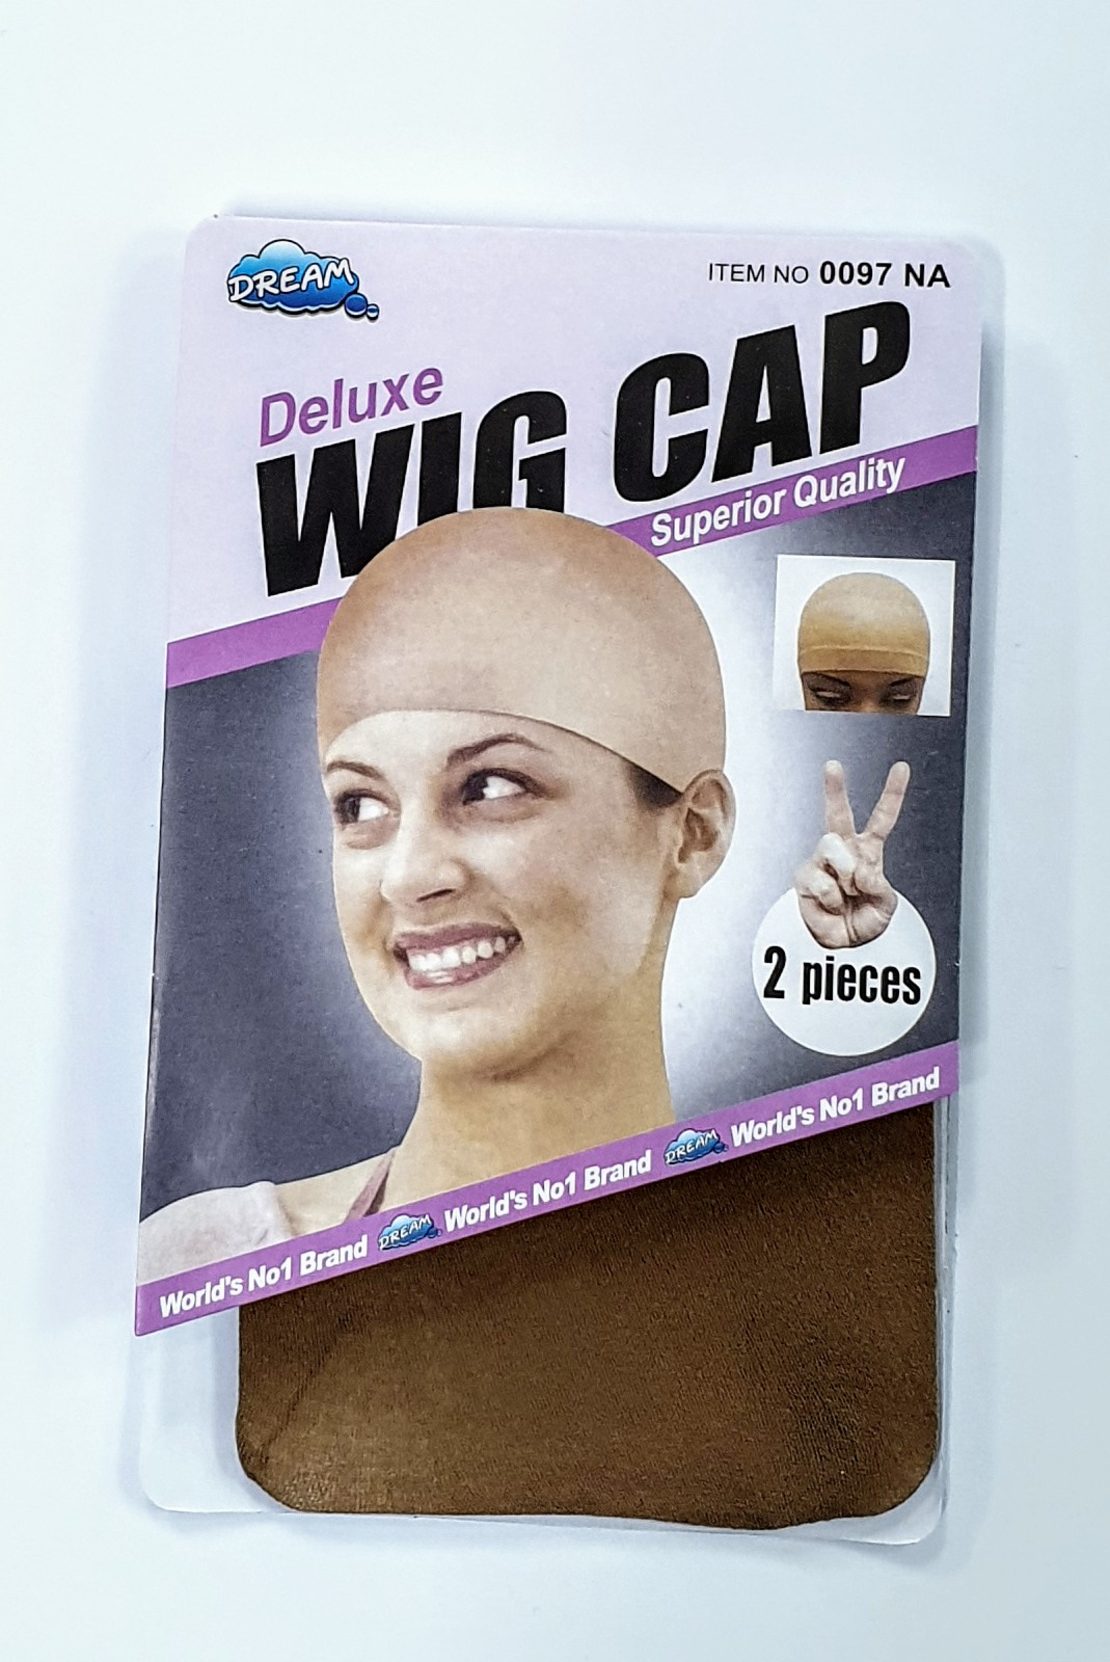 Sock cap for wig